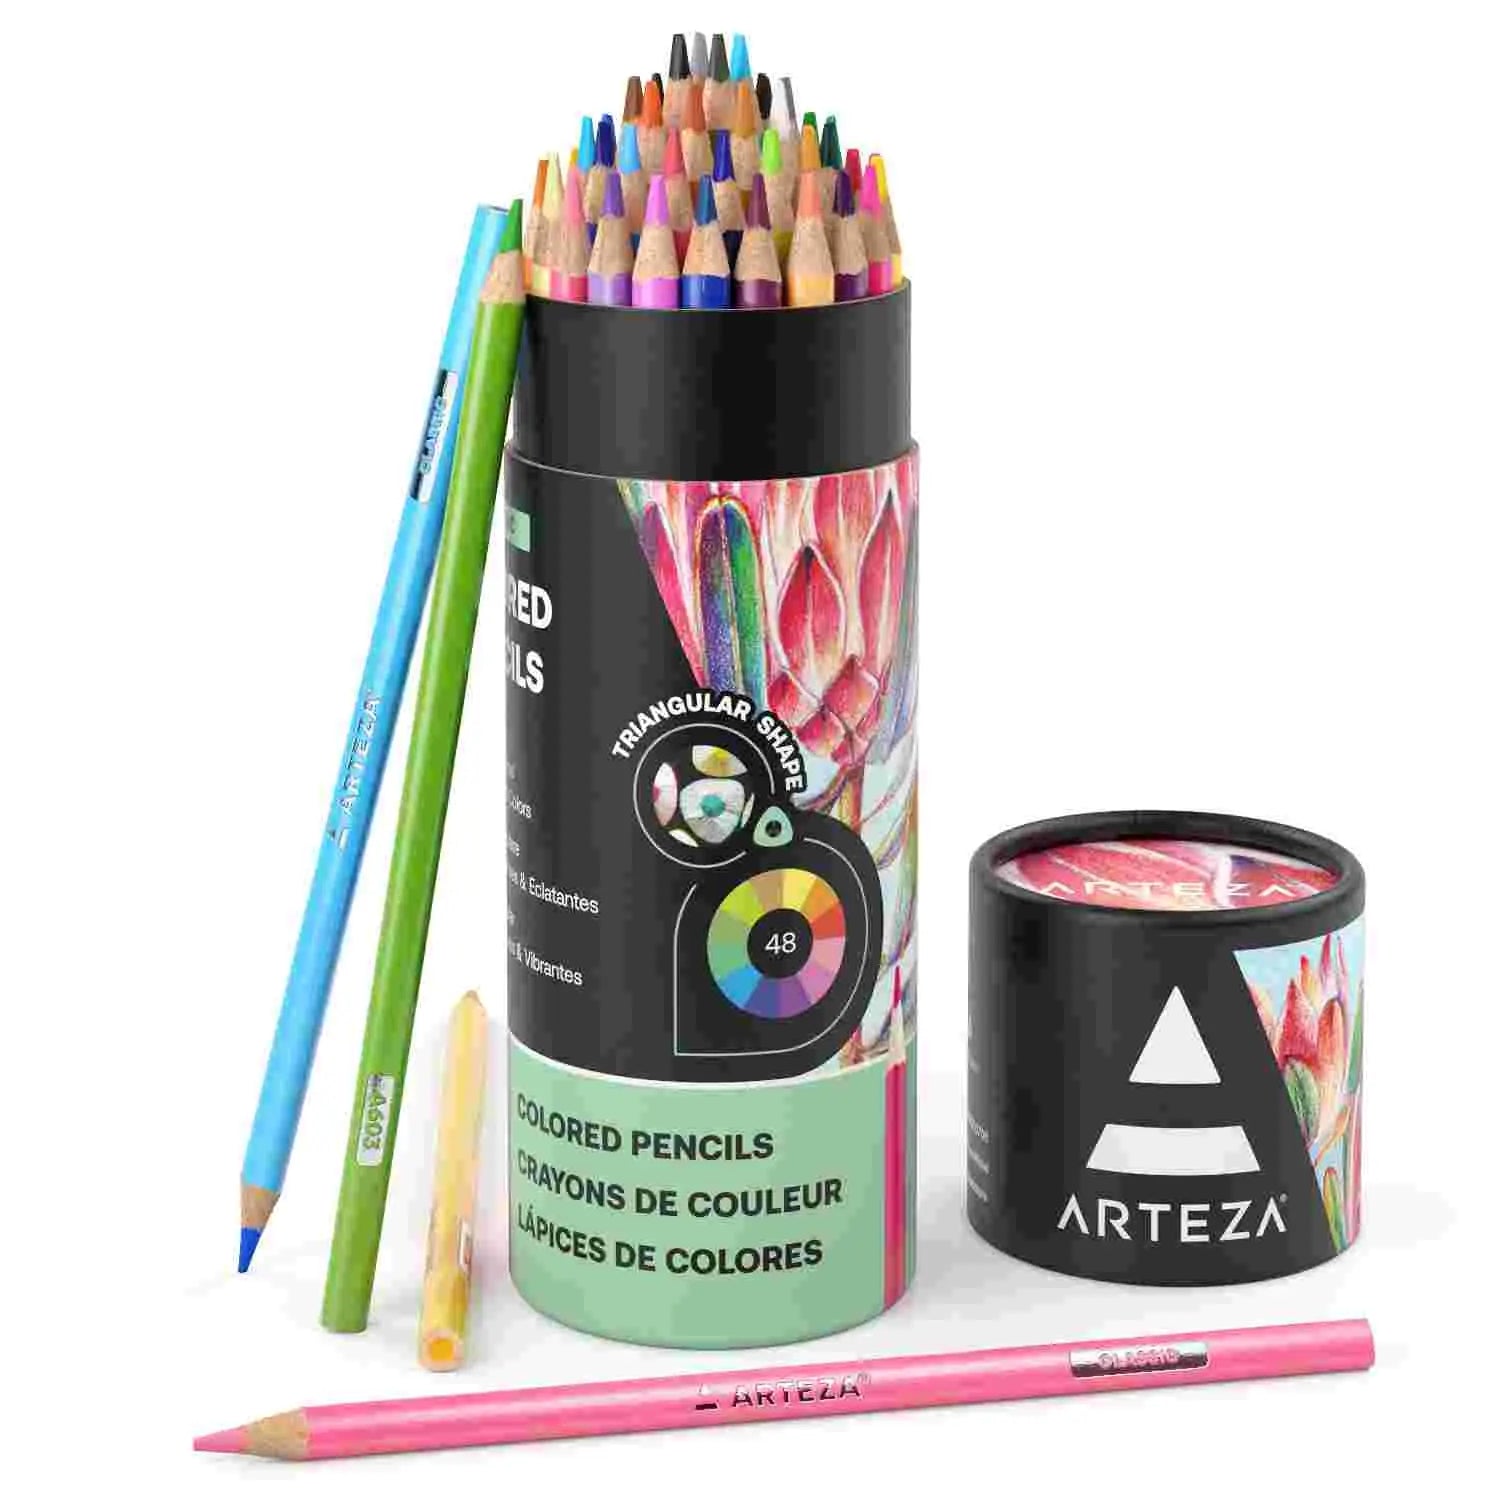 Arteza Kids Jumbo Crayons, Set of 36 Colors, Vivid Toddler Crayons from Wax, Art Supplies for Kids Craft and Drawing Activities